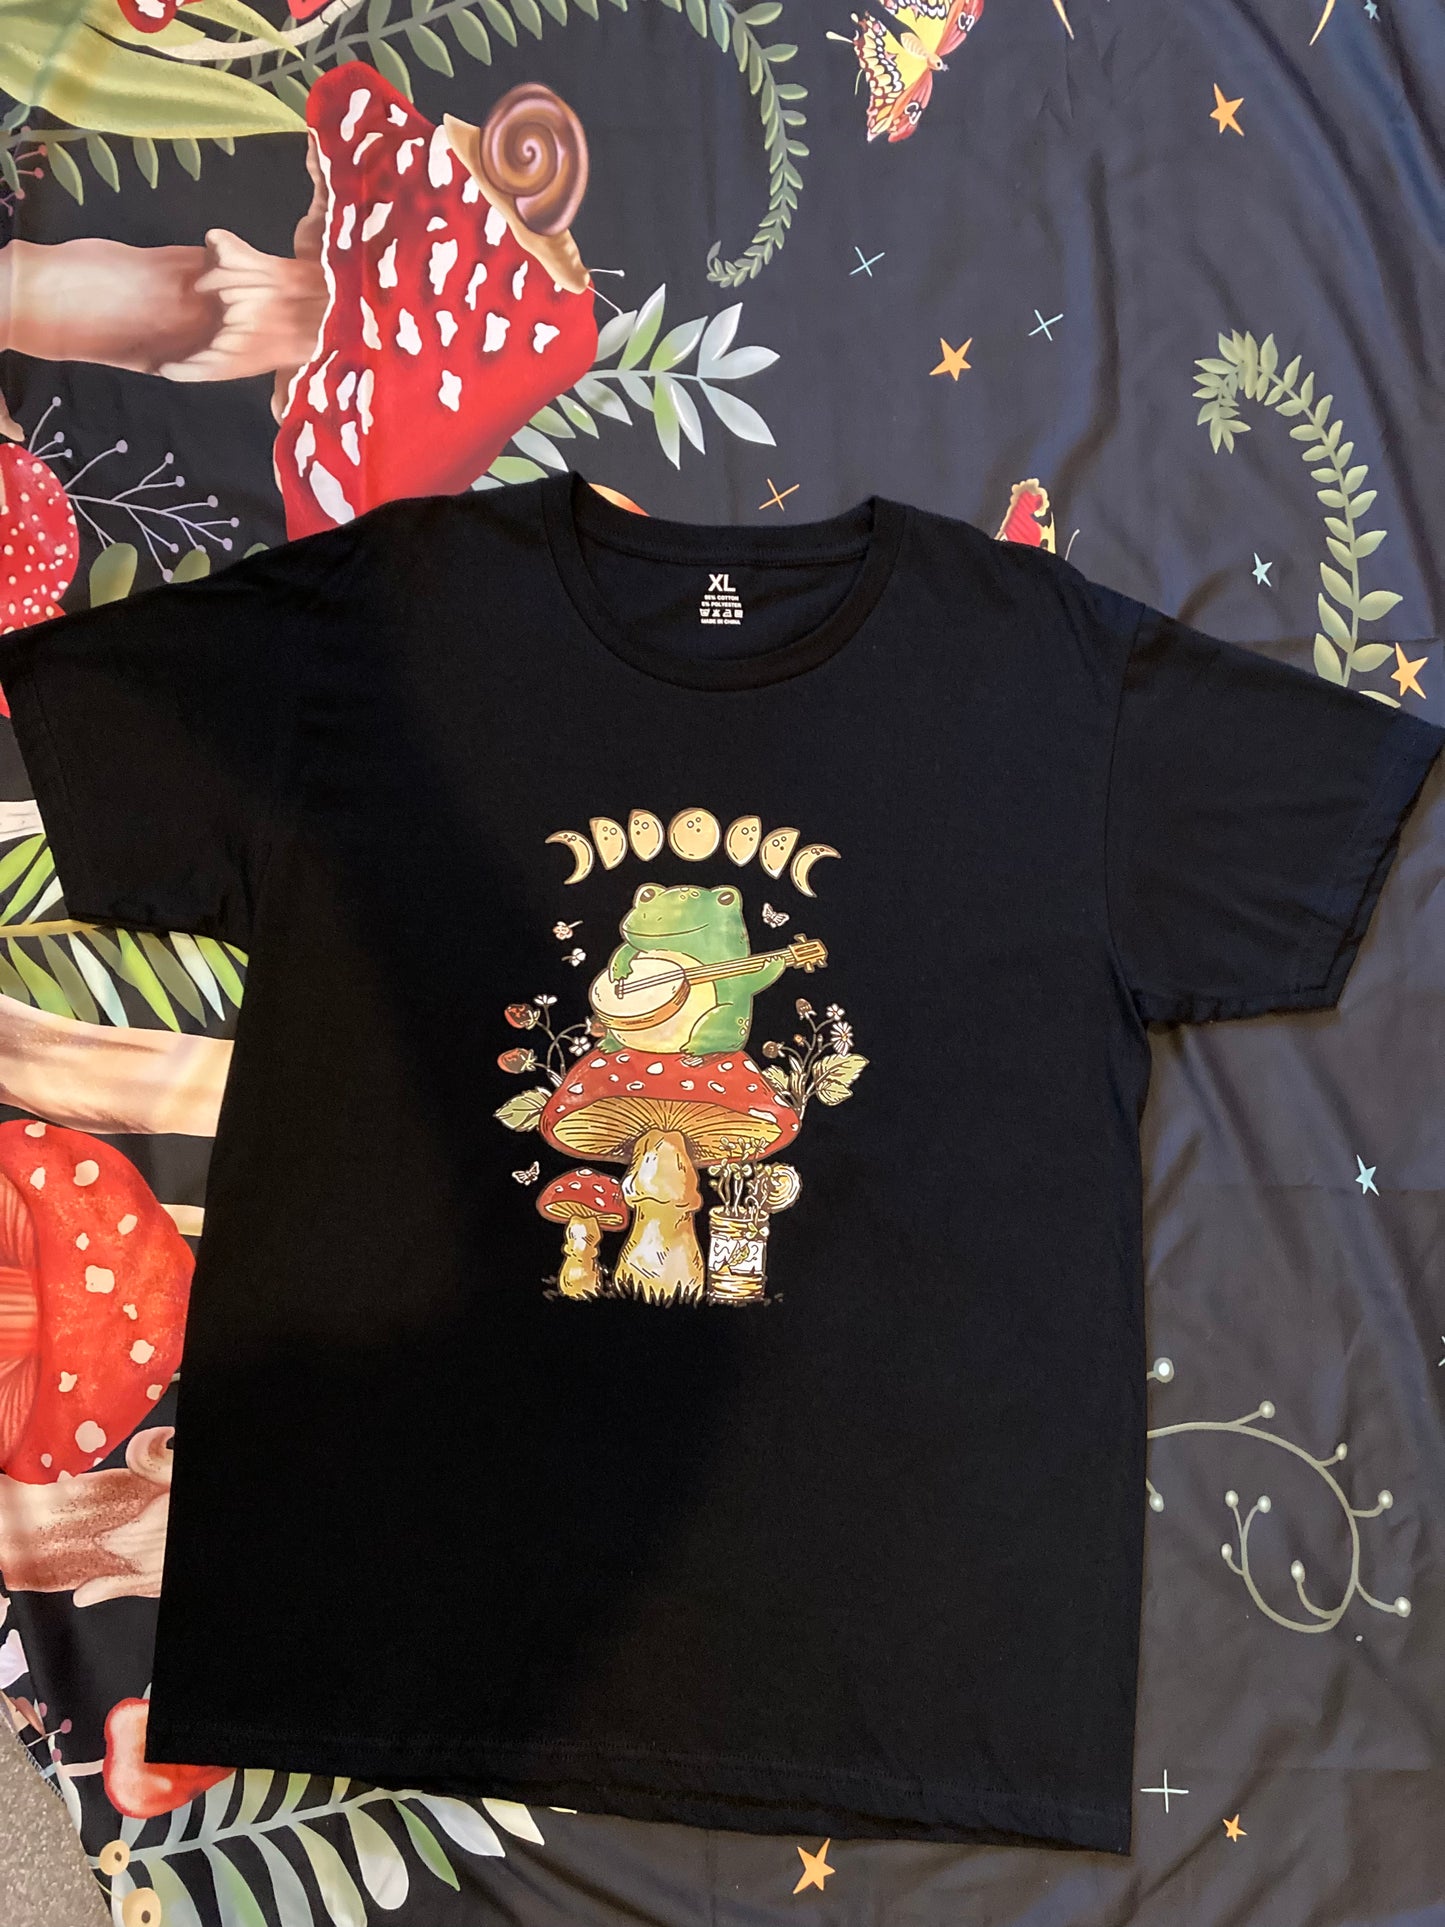 Frog Playing Banjo Sitting on a Toadstool T~Shirt